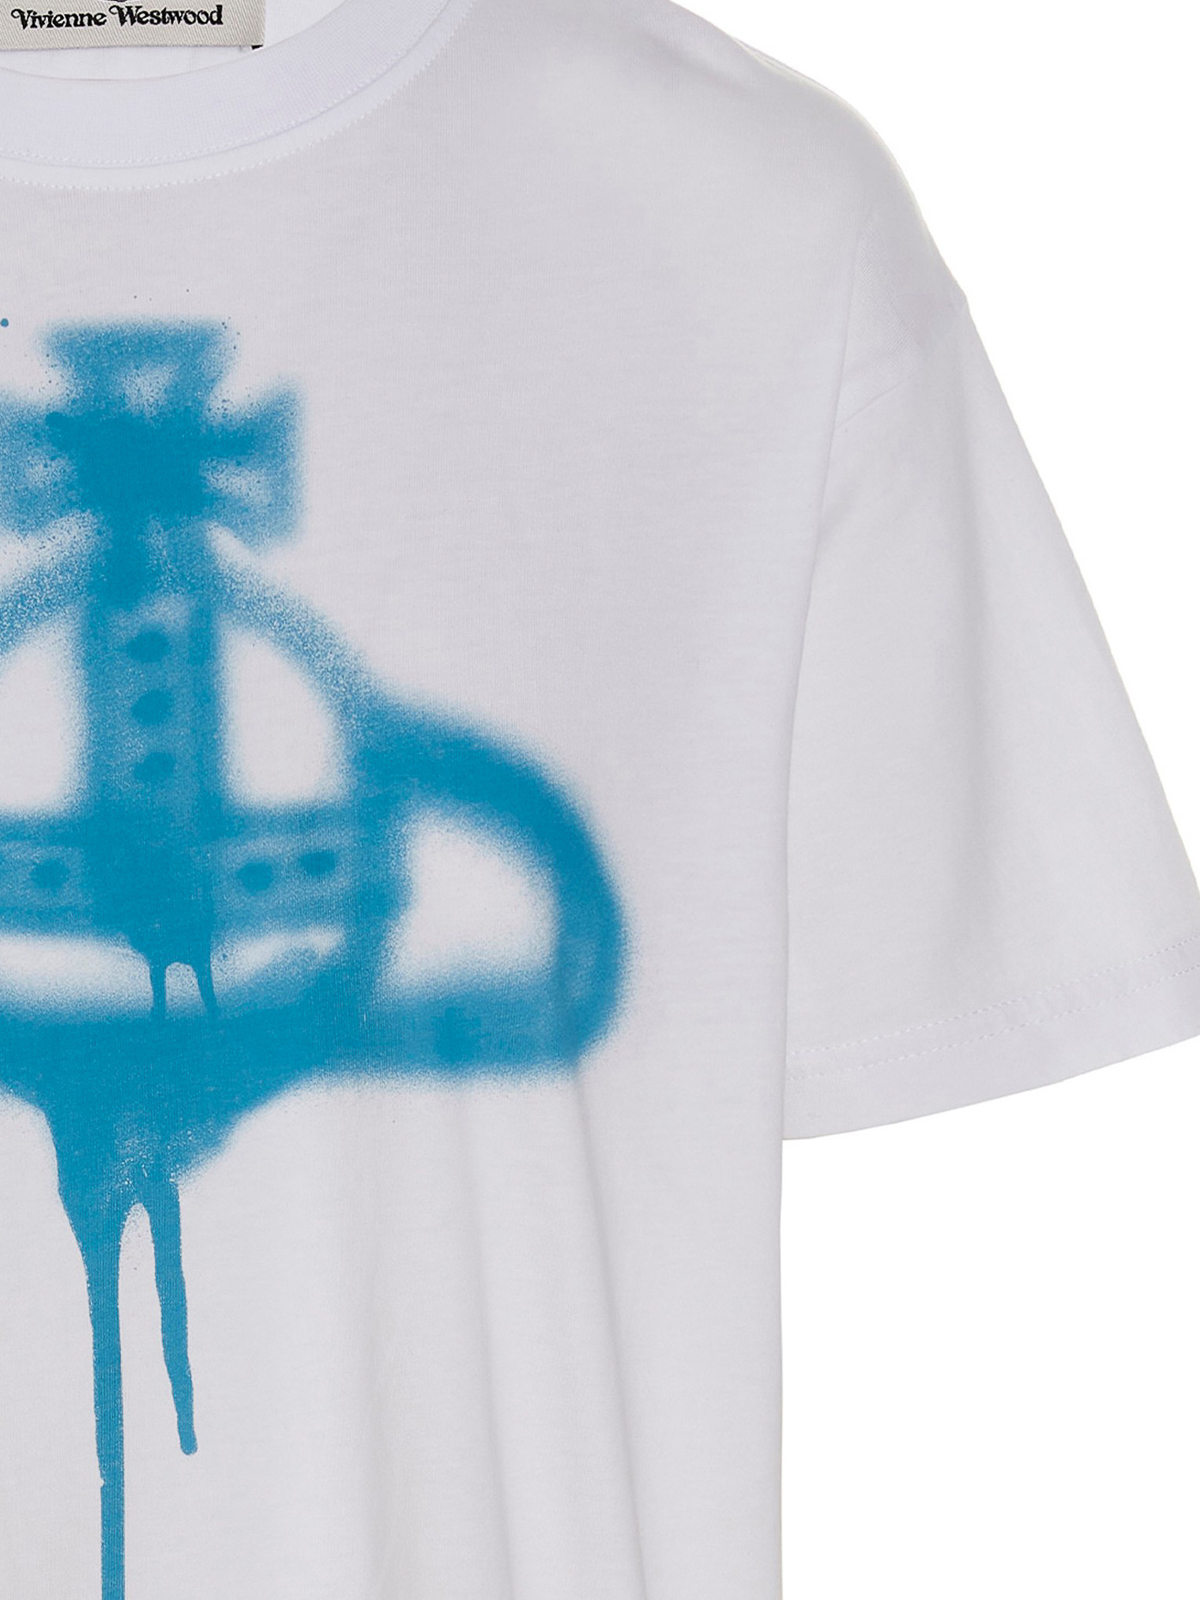 Vivienne Westwood Spray Orb T Shirts